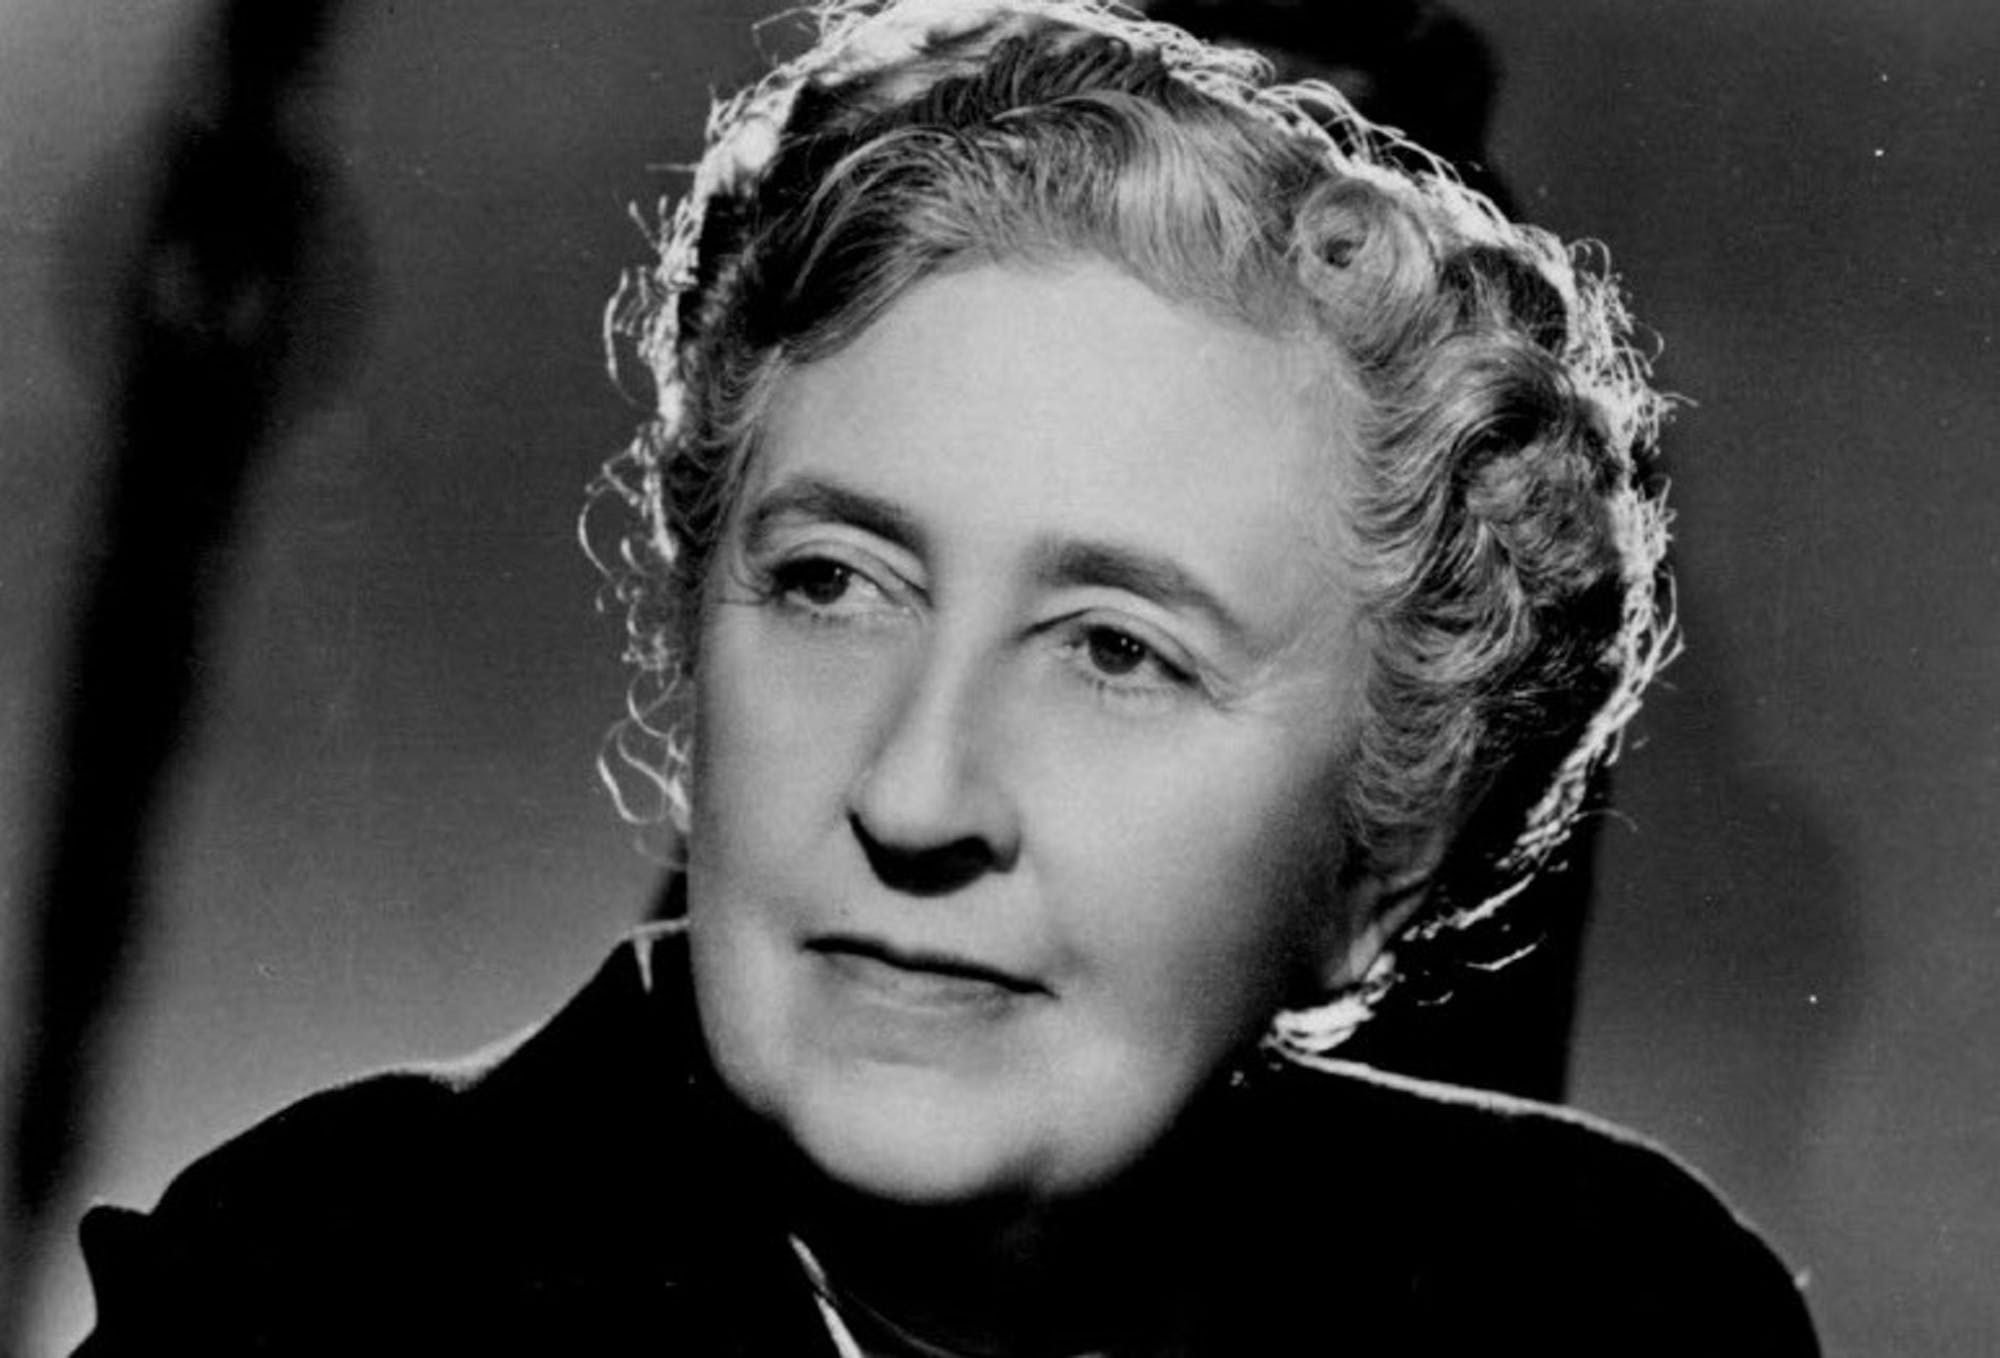 Agatha Christie Hercule Poirot The First Cases